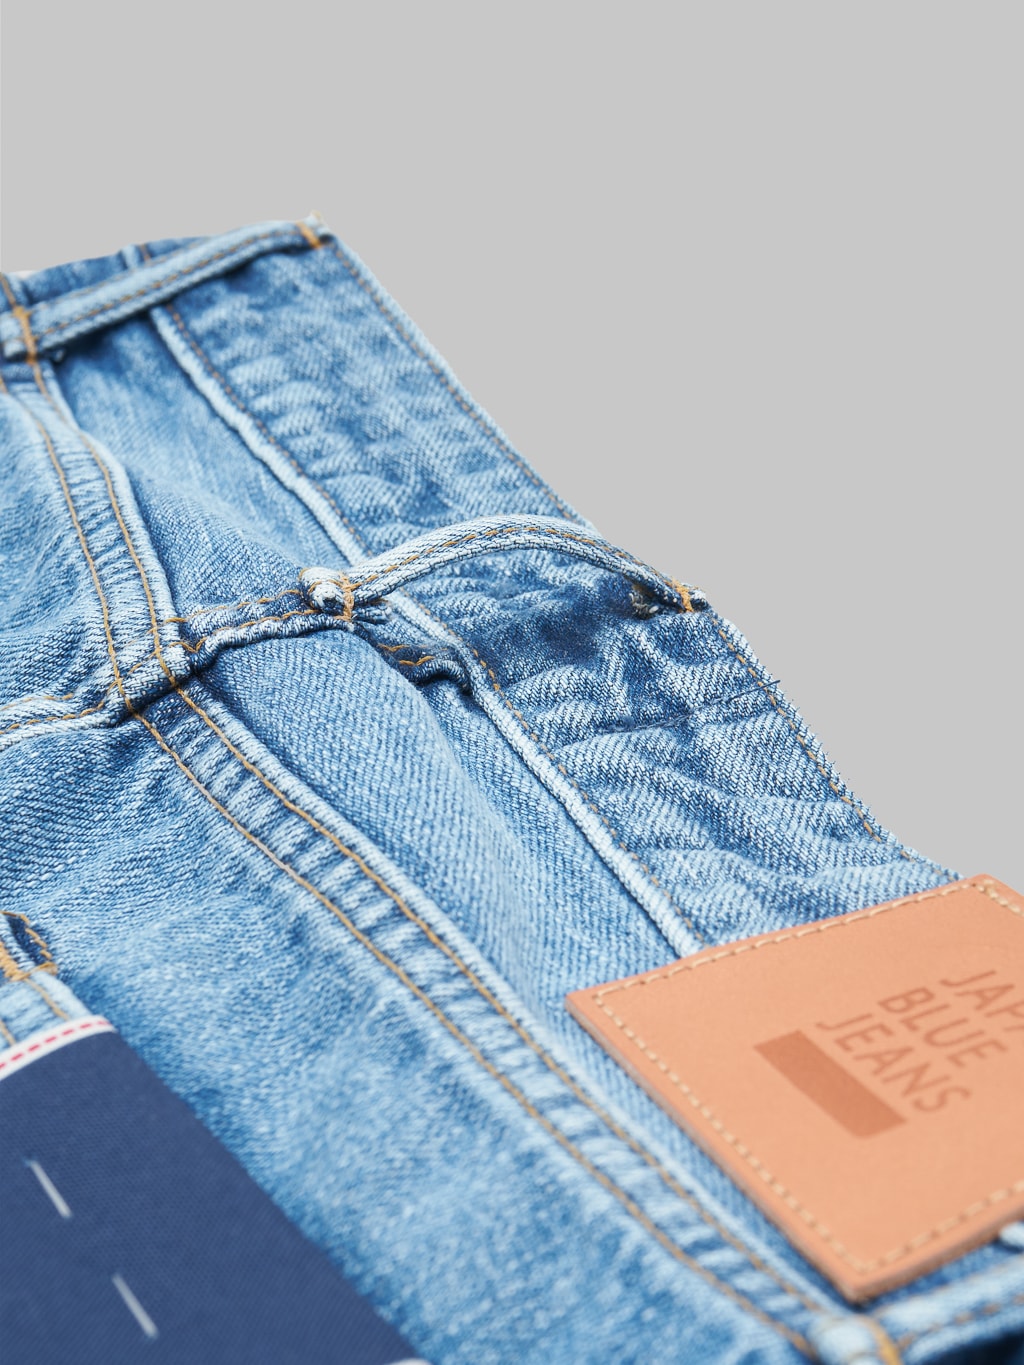 Japan Blue J304 Africa cotton Stonewashed Straight Jeans belt loop